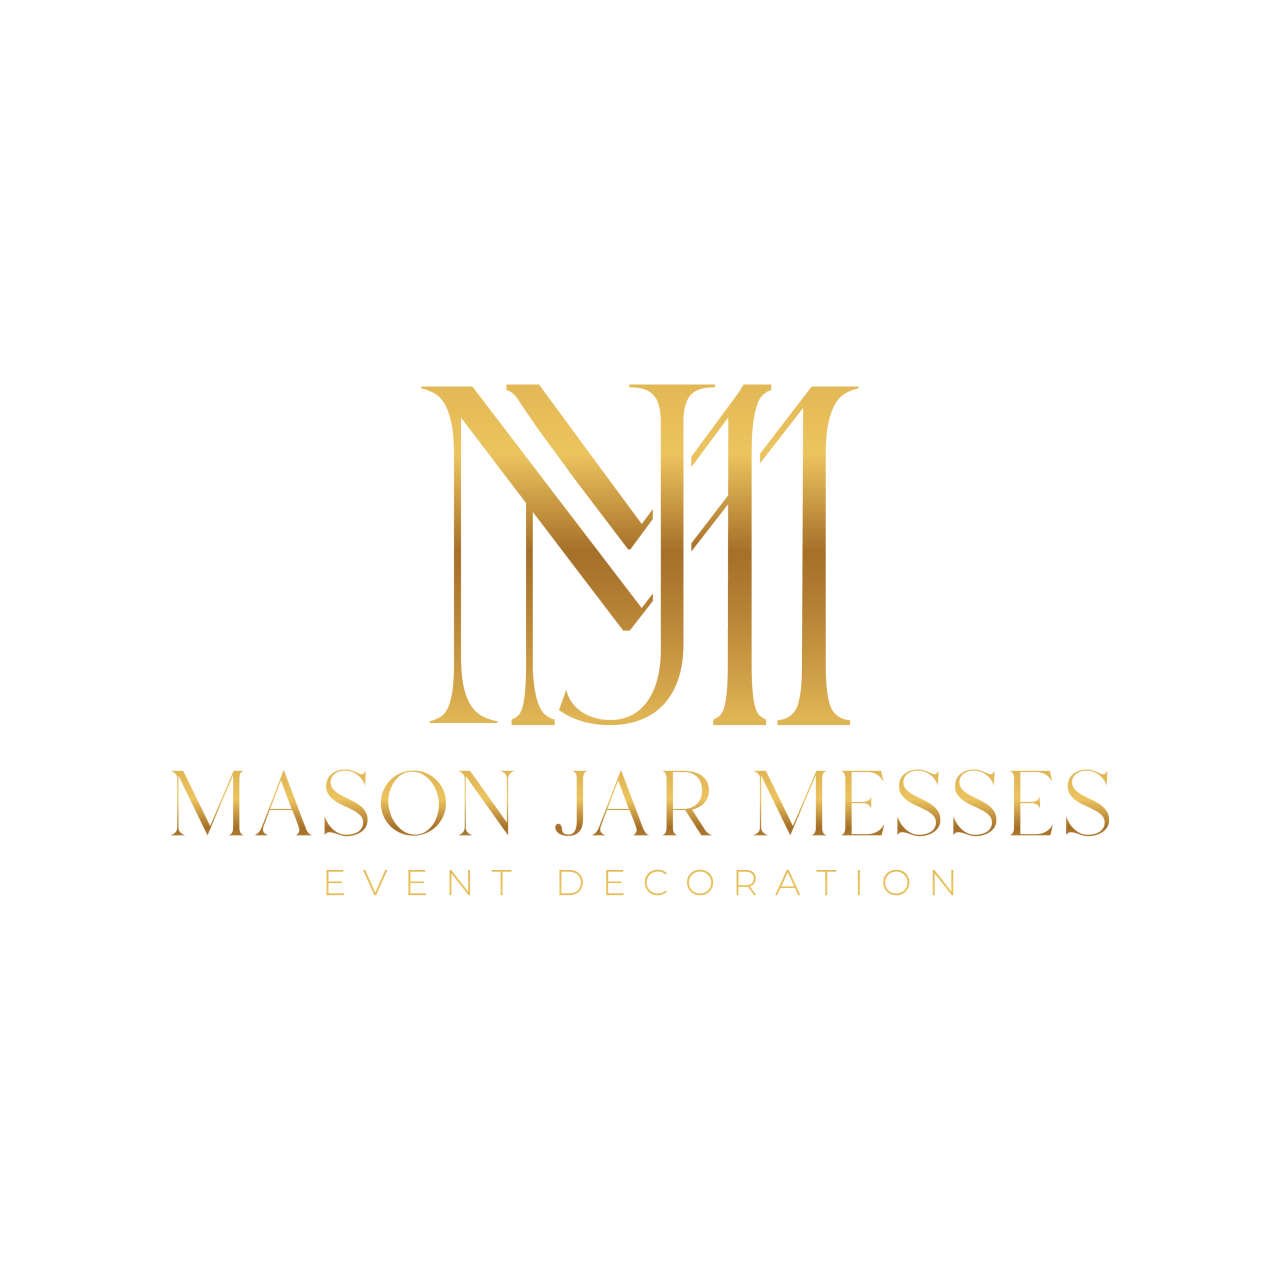 Mason Jar Messes's logo